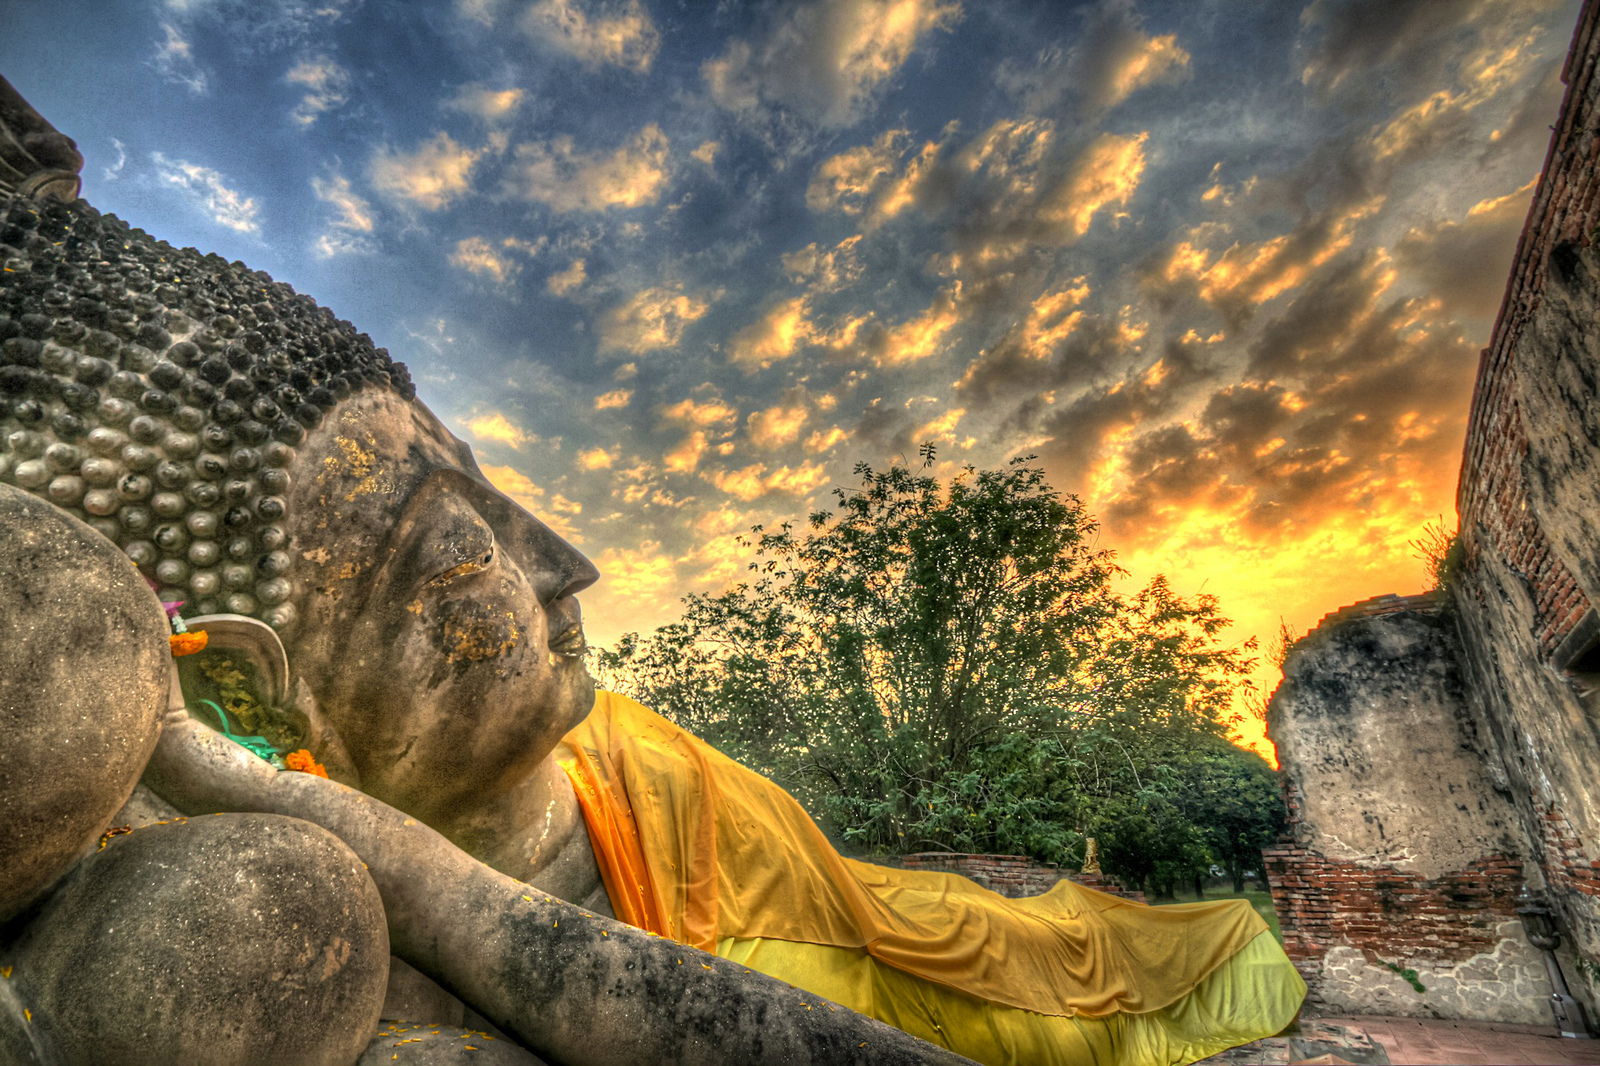 Reclining buddha at sunset.jpg